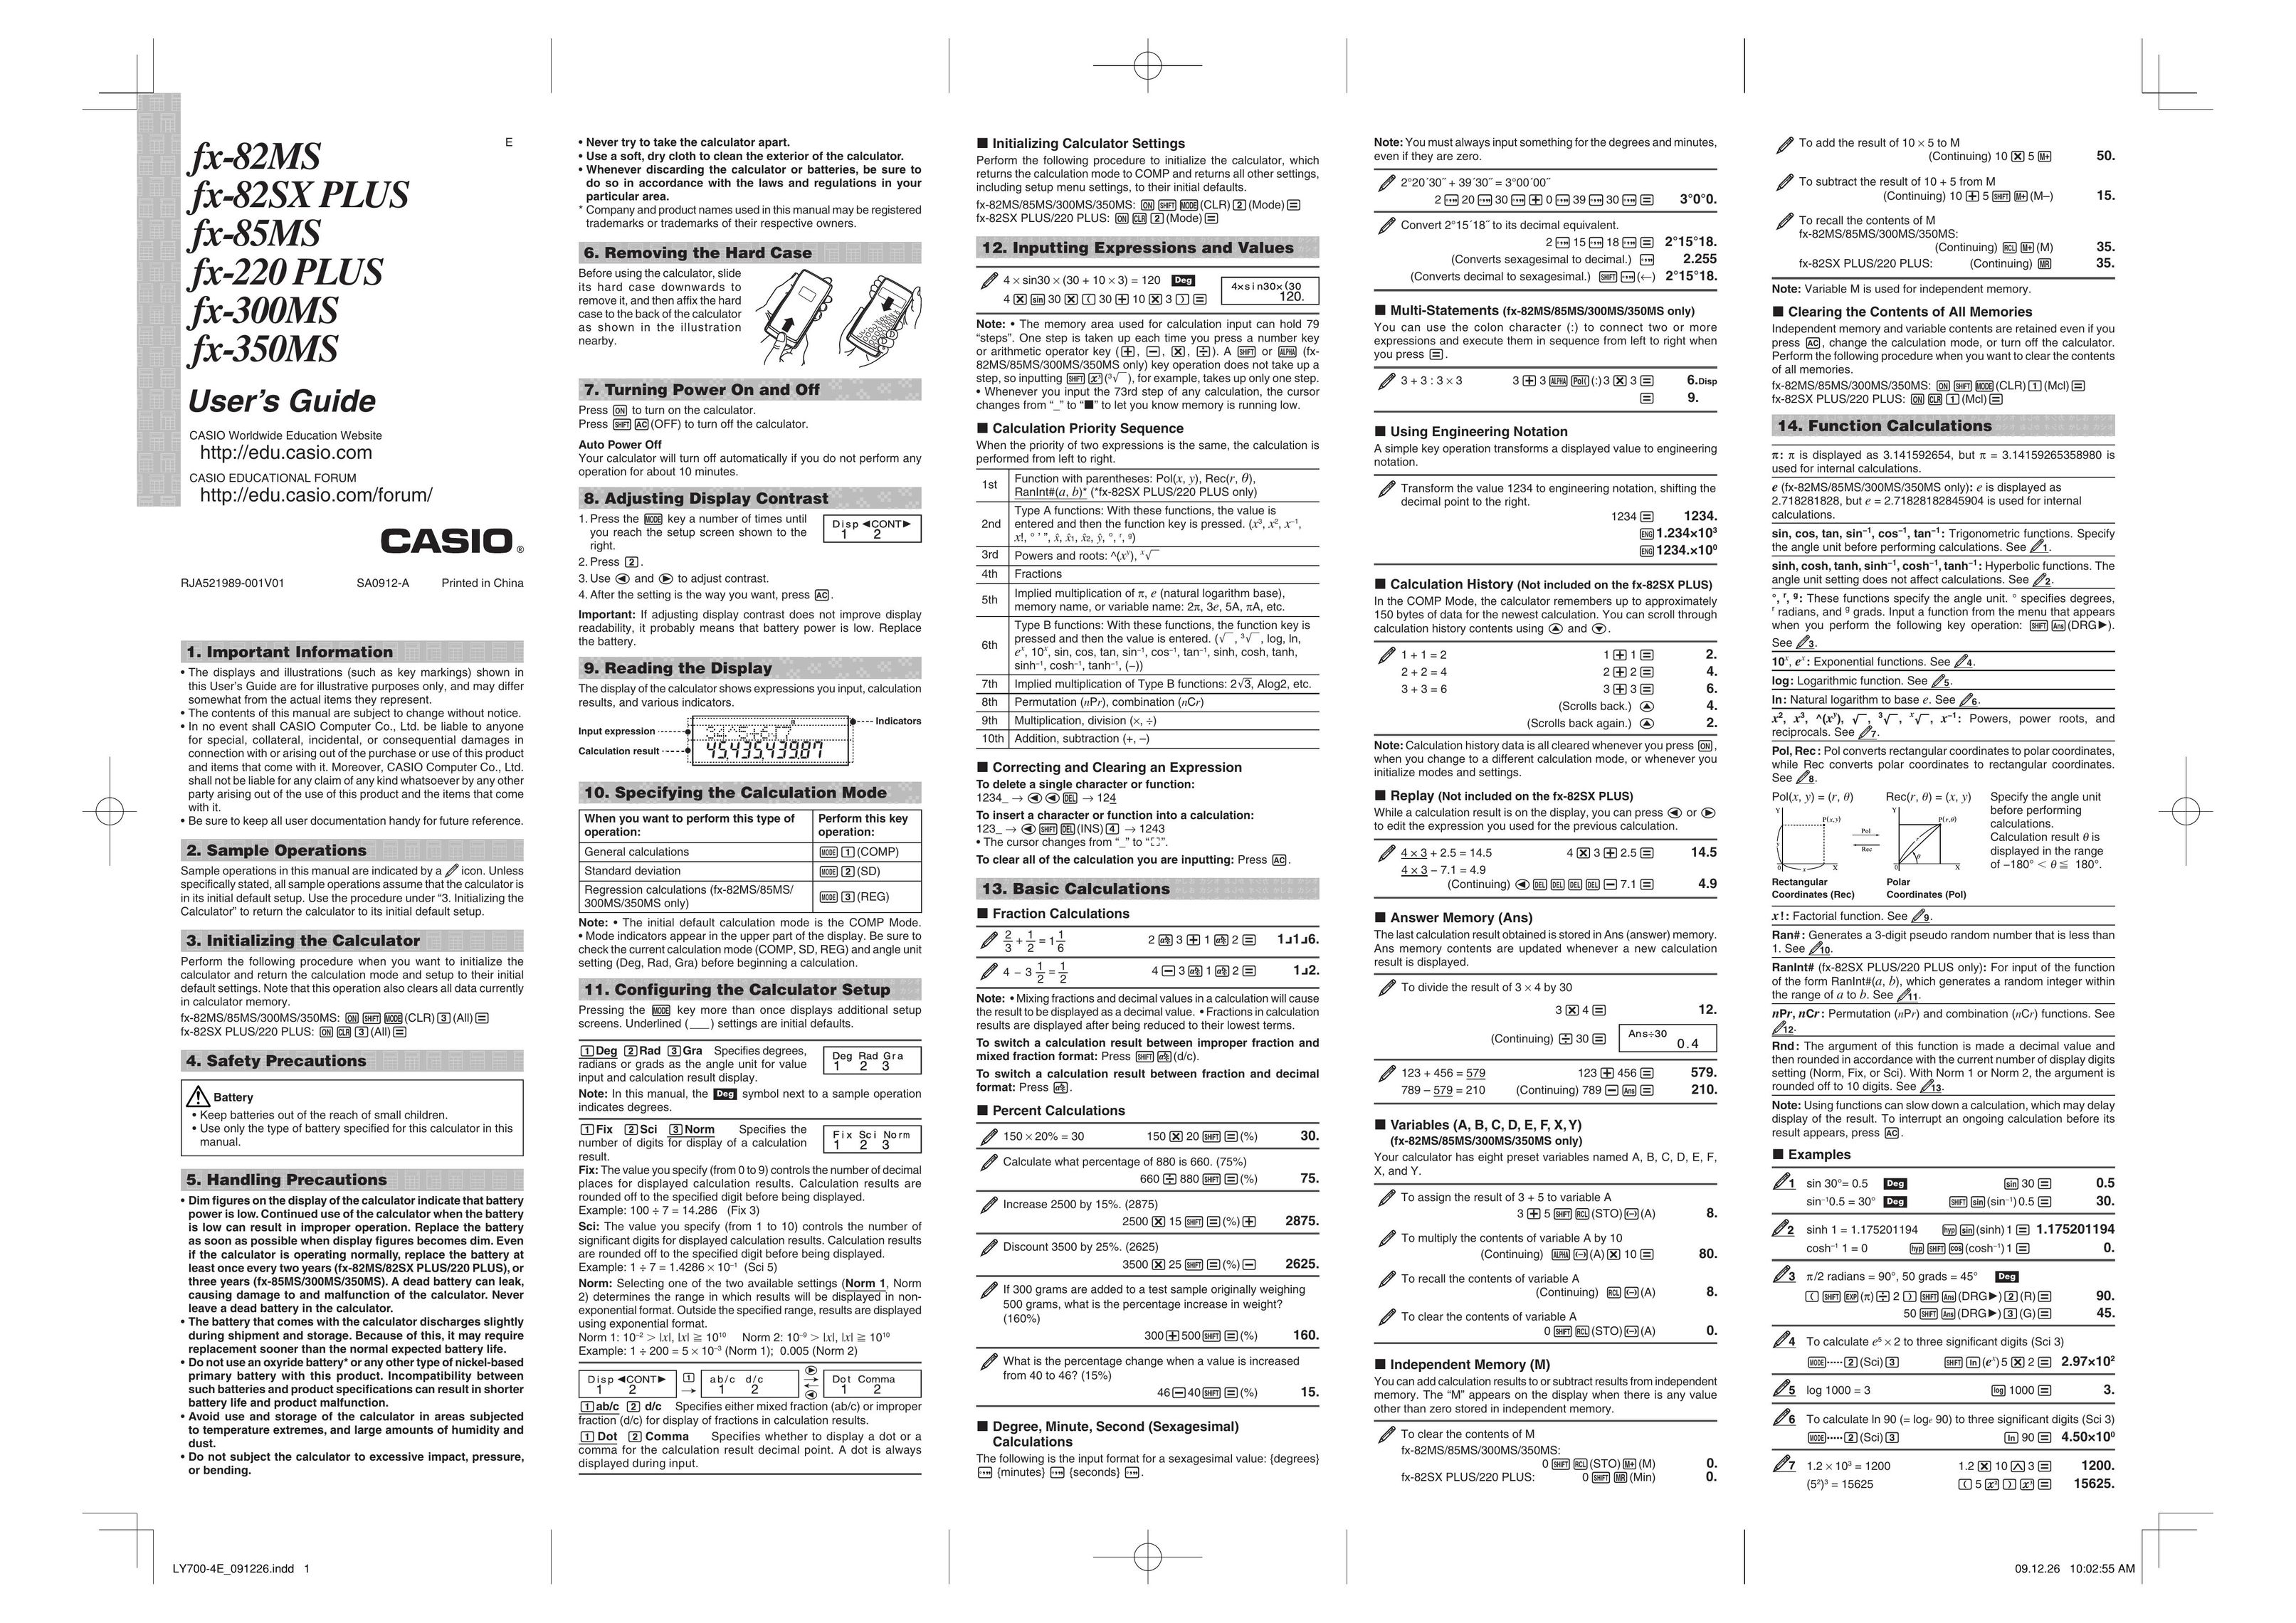 Casio FX-220 PLUS Calculator User Manual